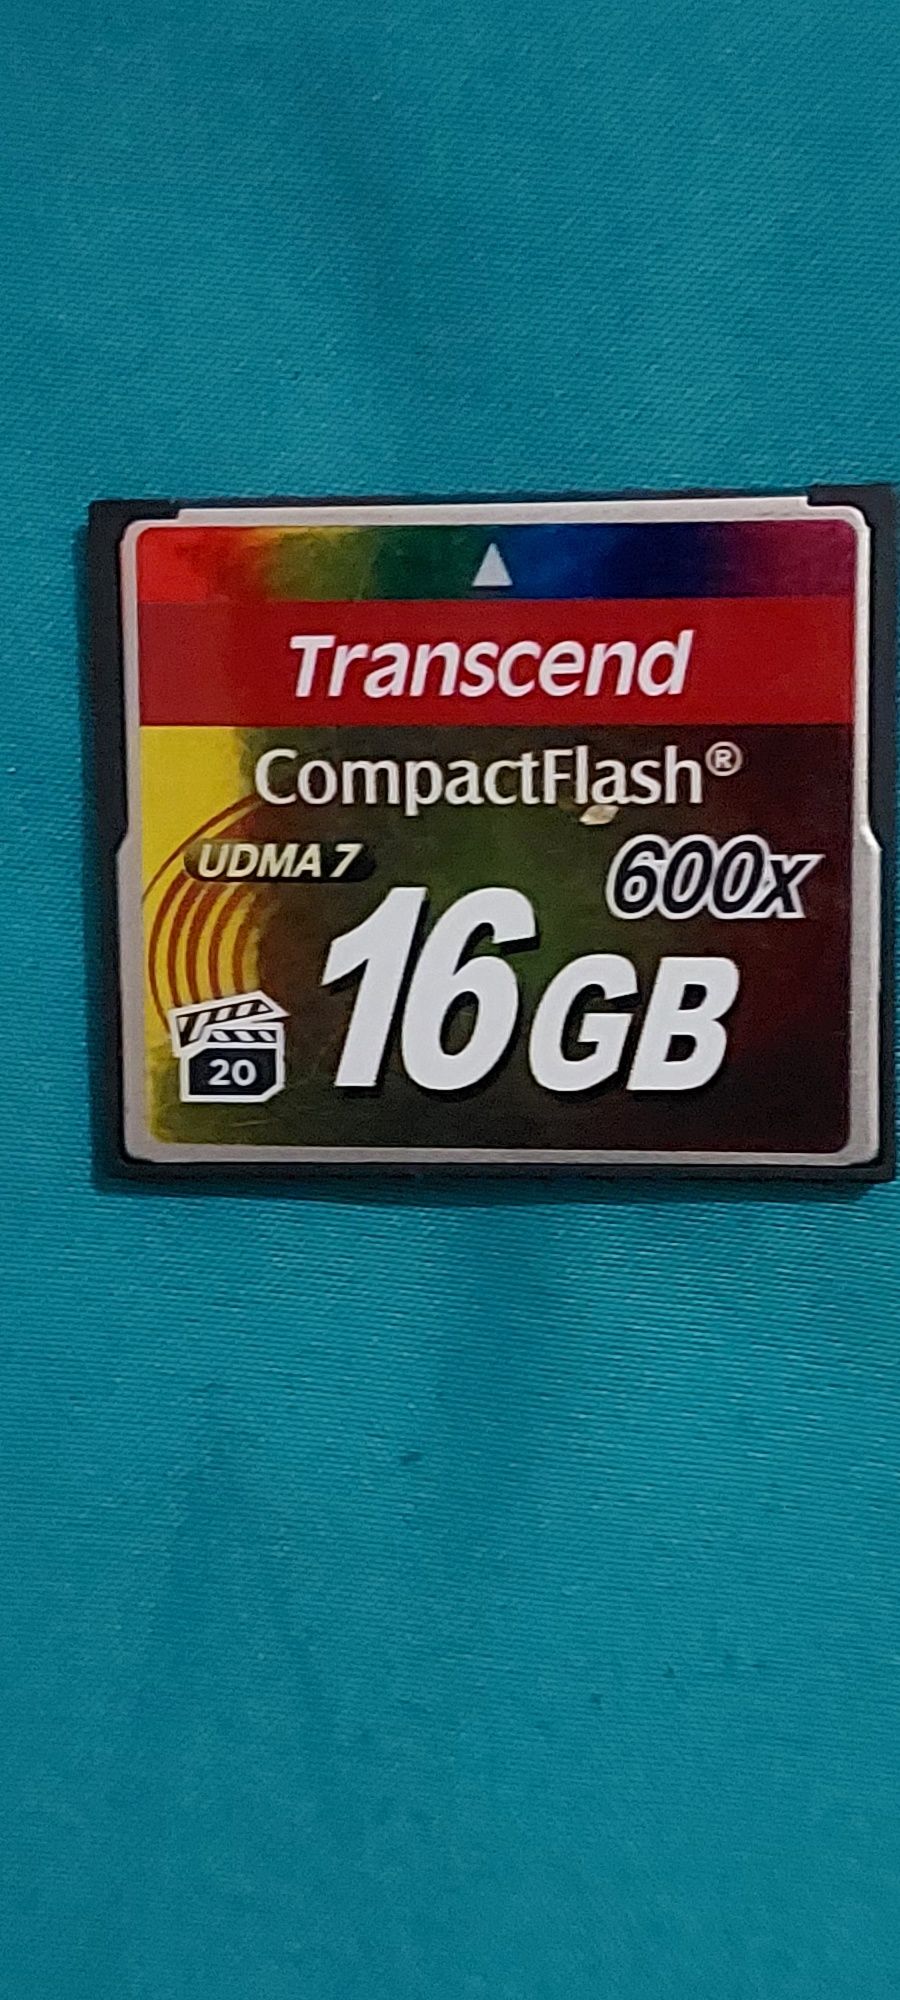 CompaktFlash 16Gb